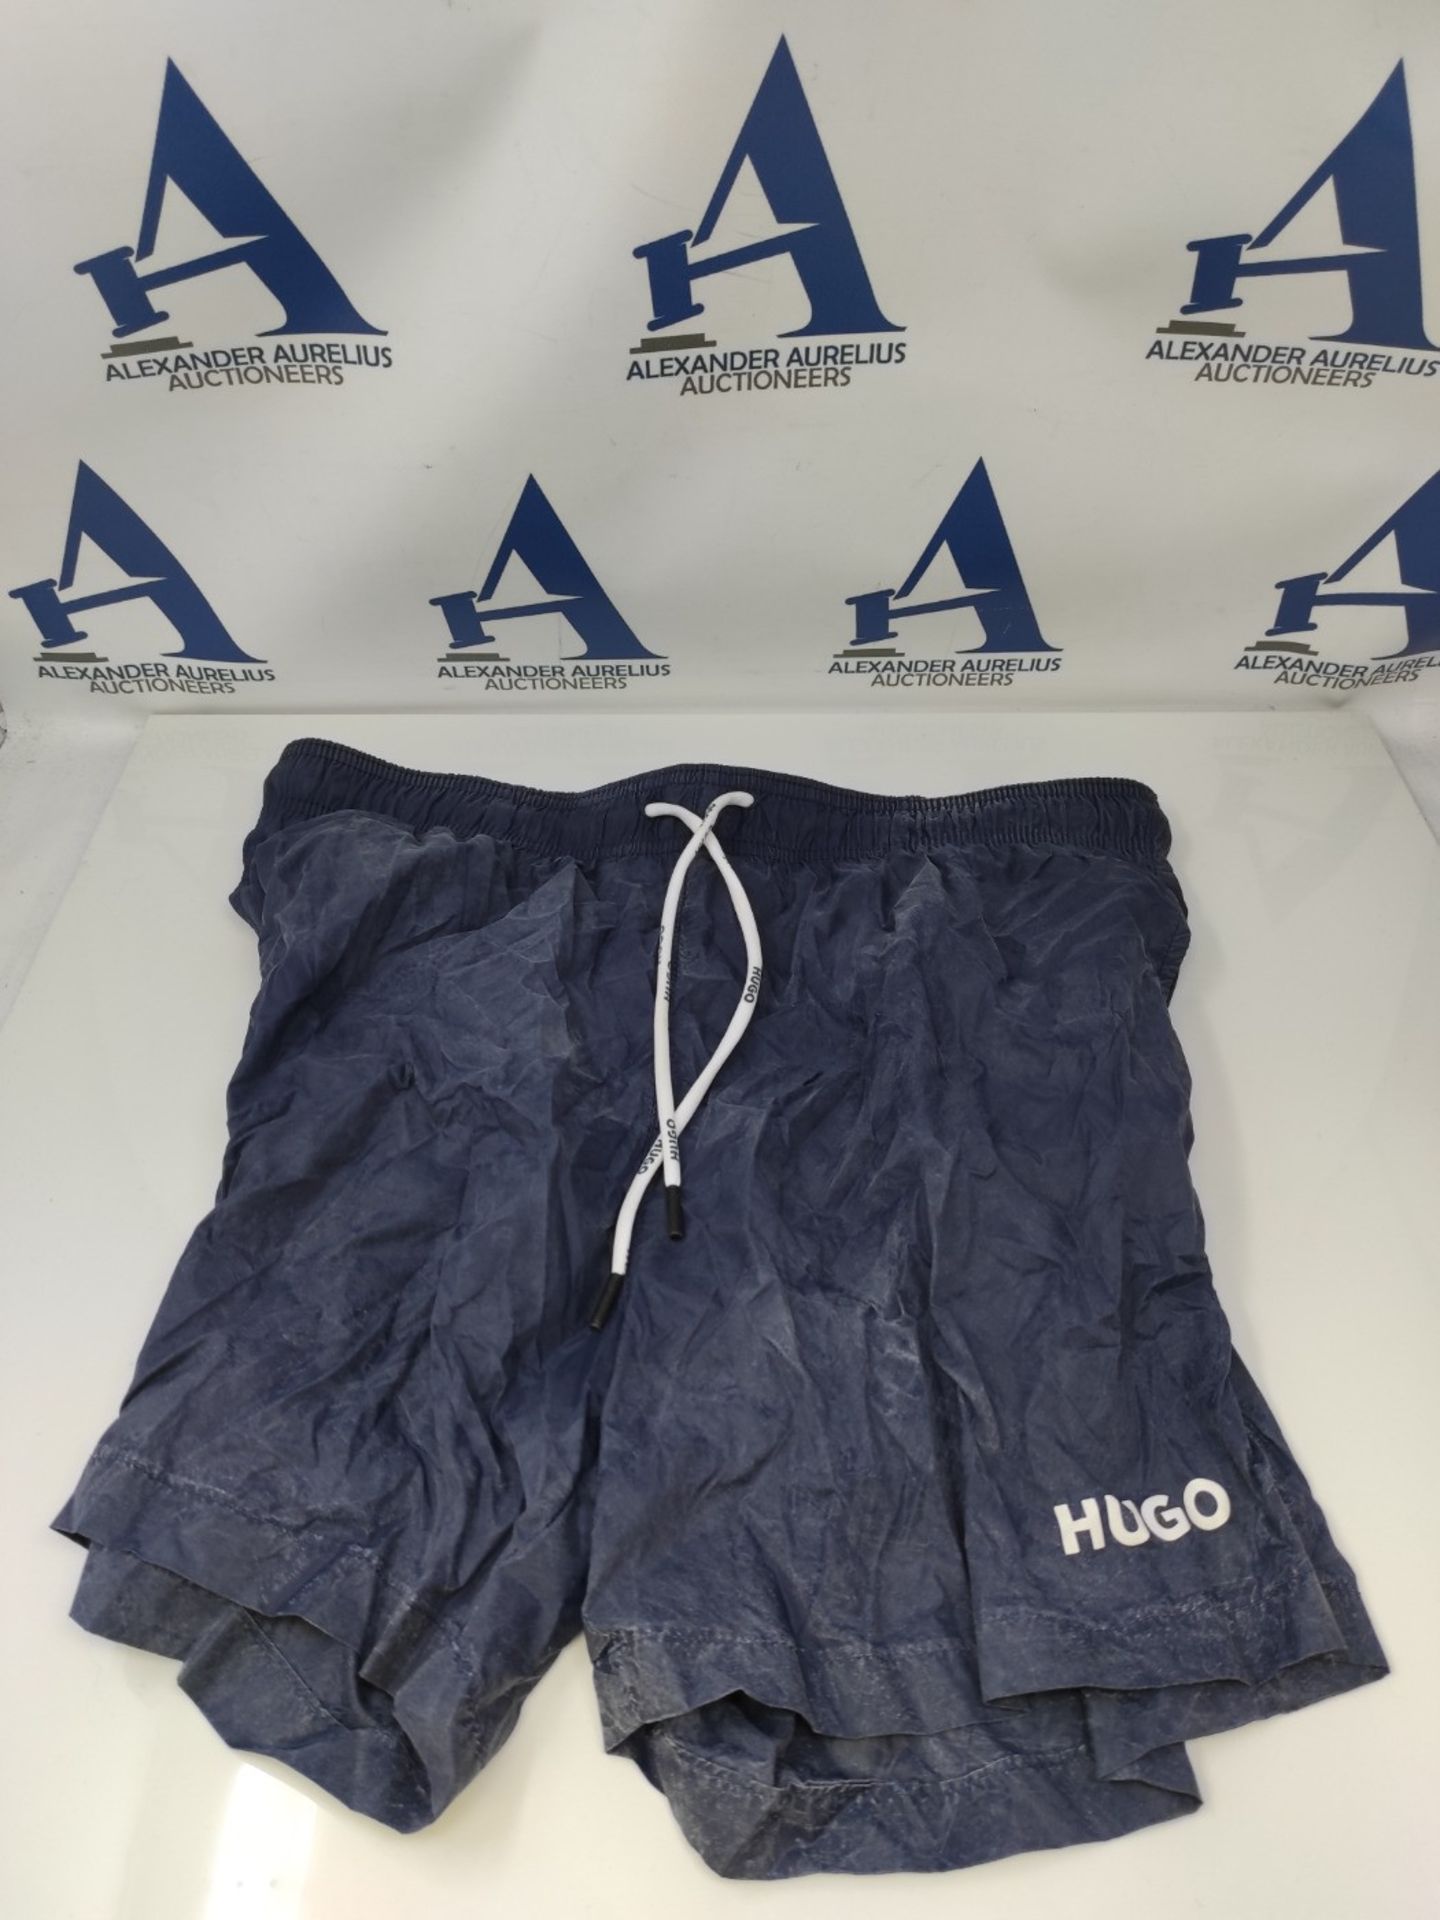 HUGO Men's Haiti Swim Trunks, New - Dark Blue405, Size L EU